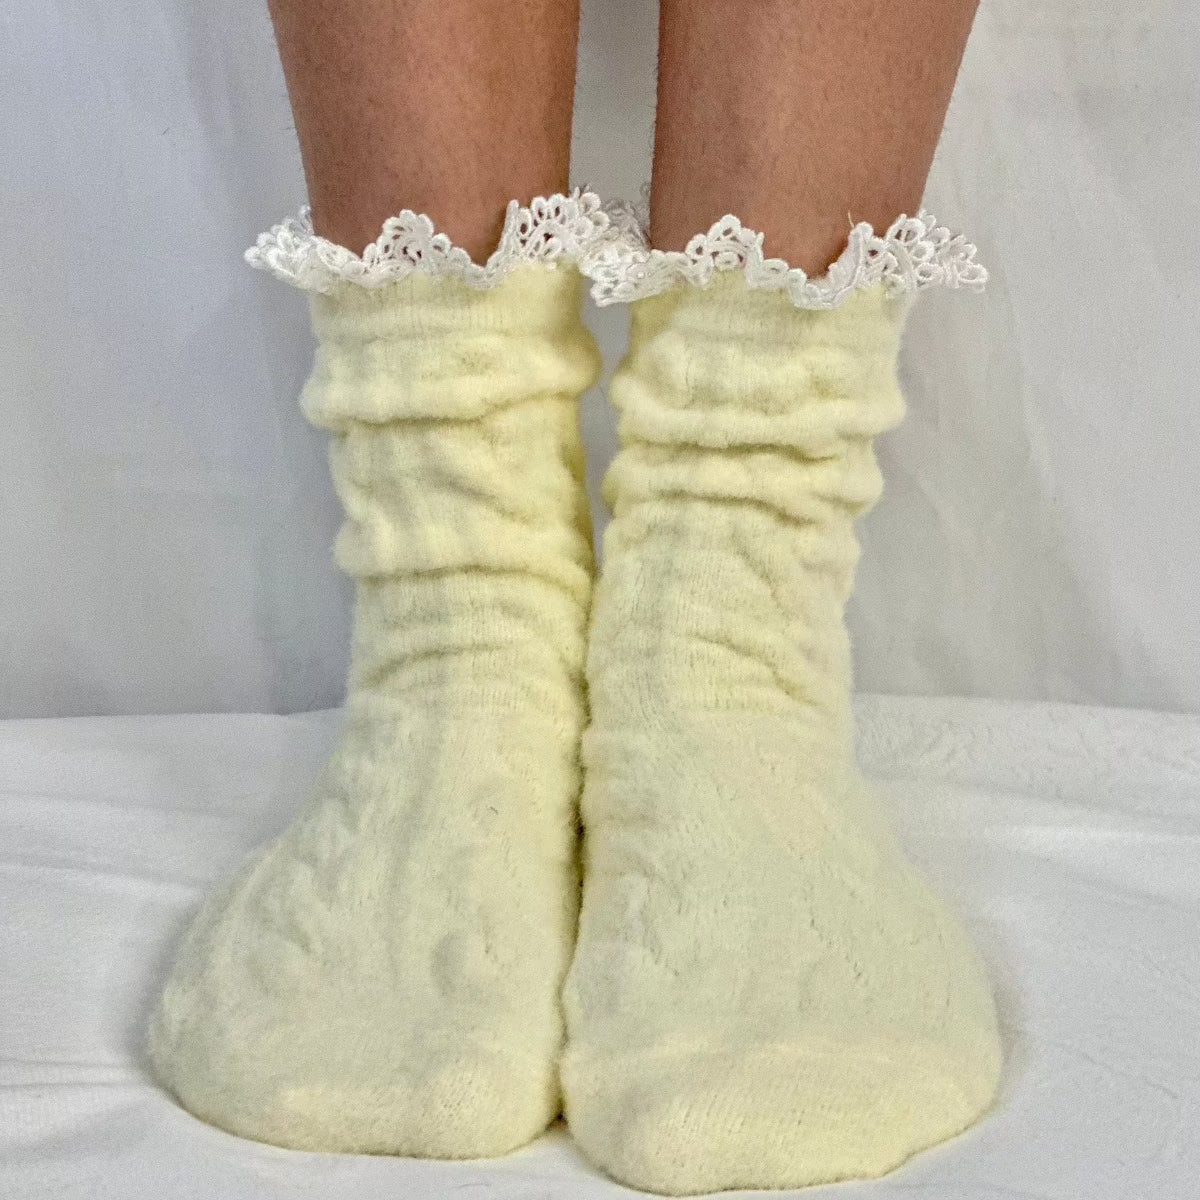 Heavenly yellow soft lace socks women's, ladies slipper socks, best quality .